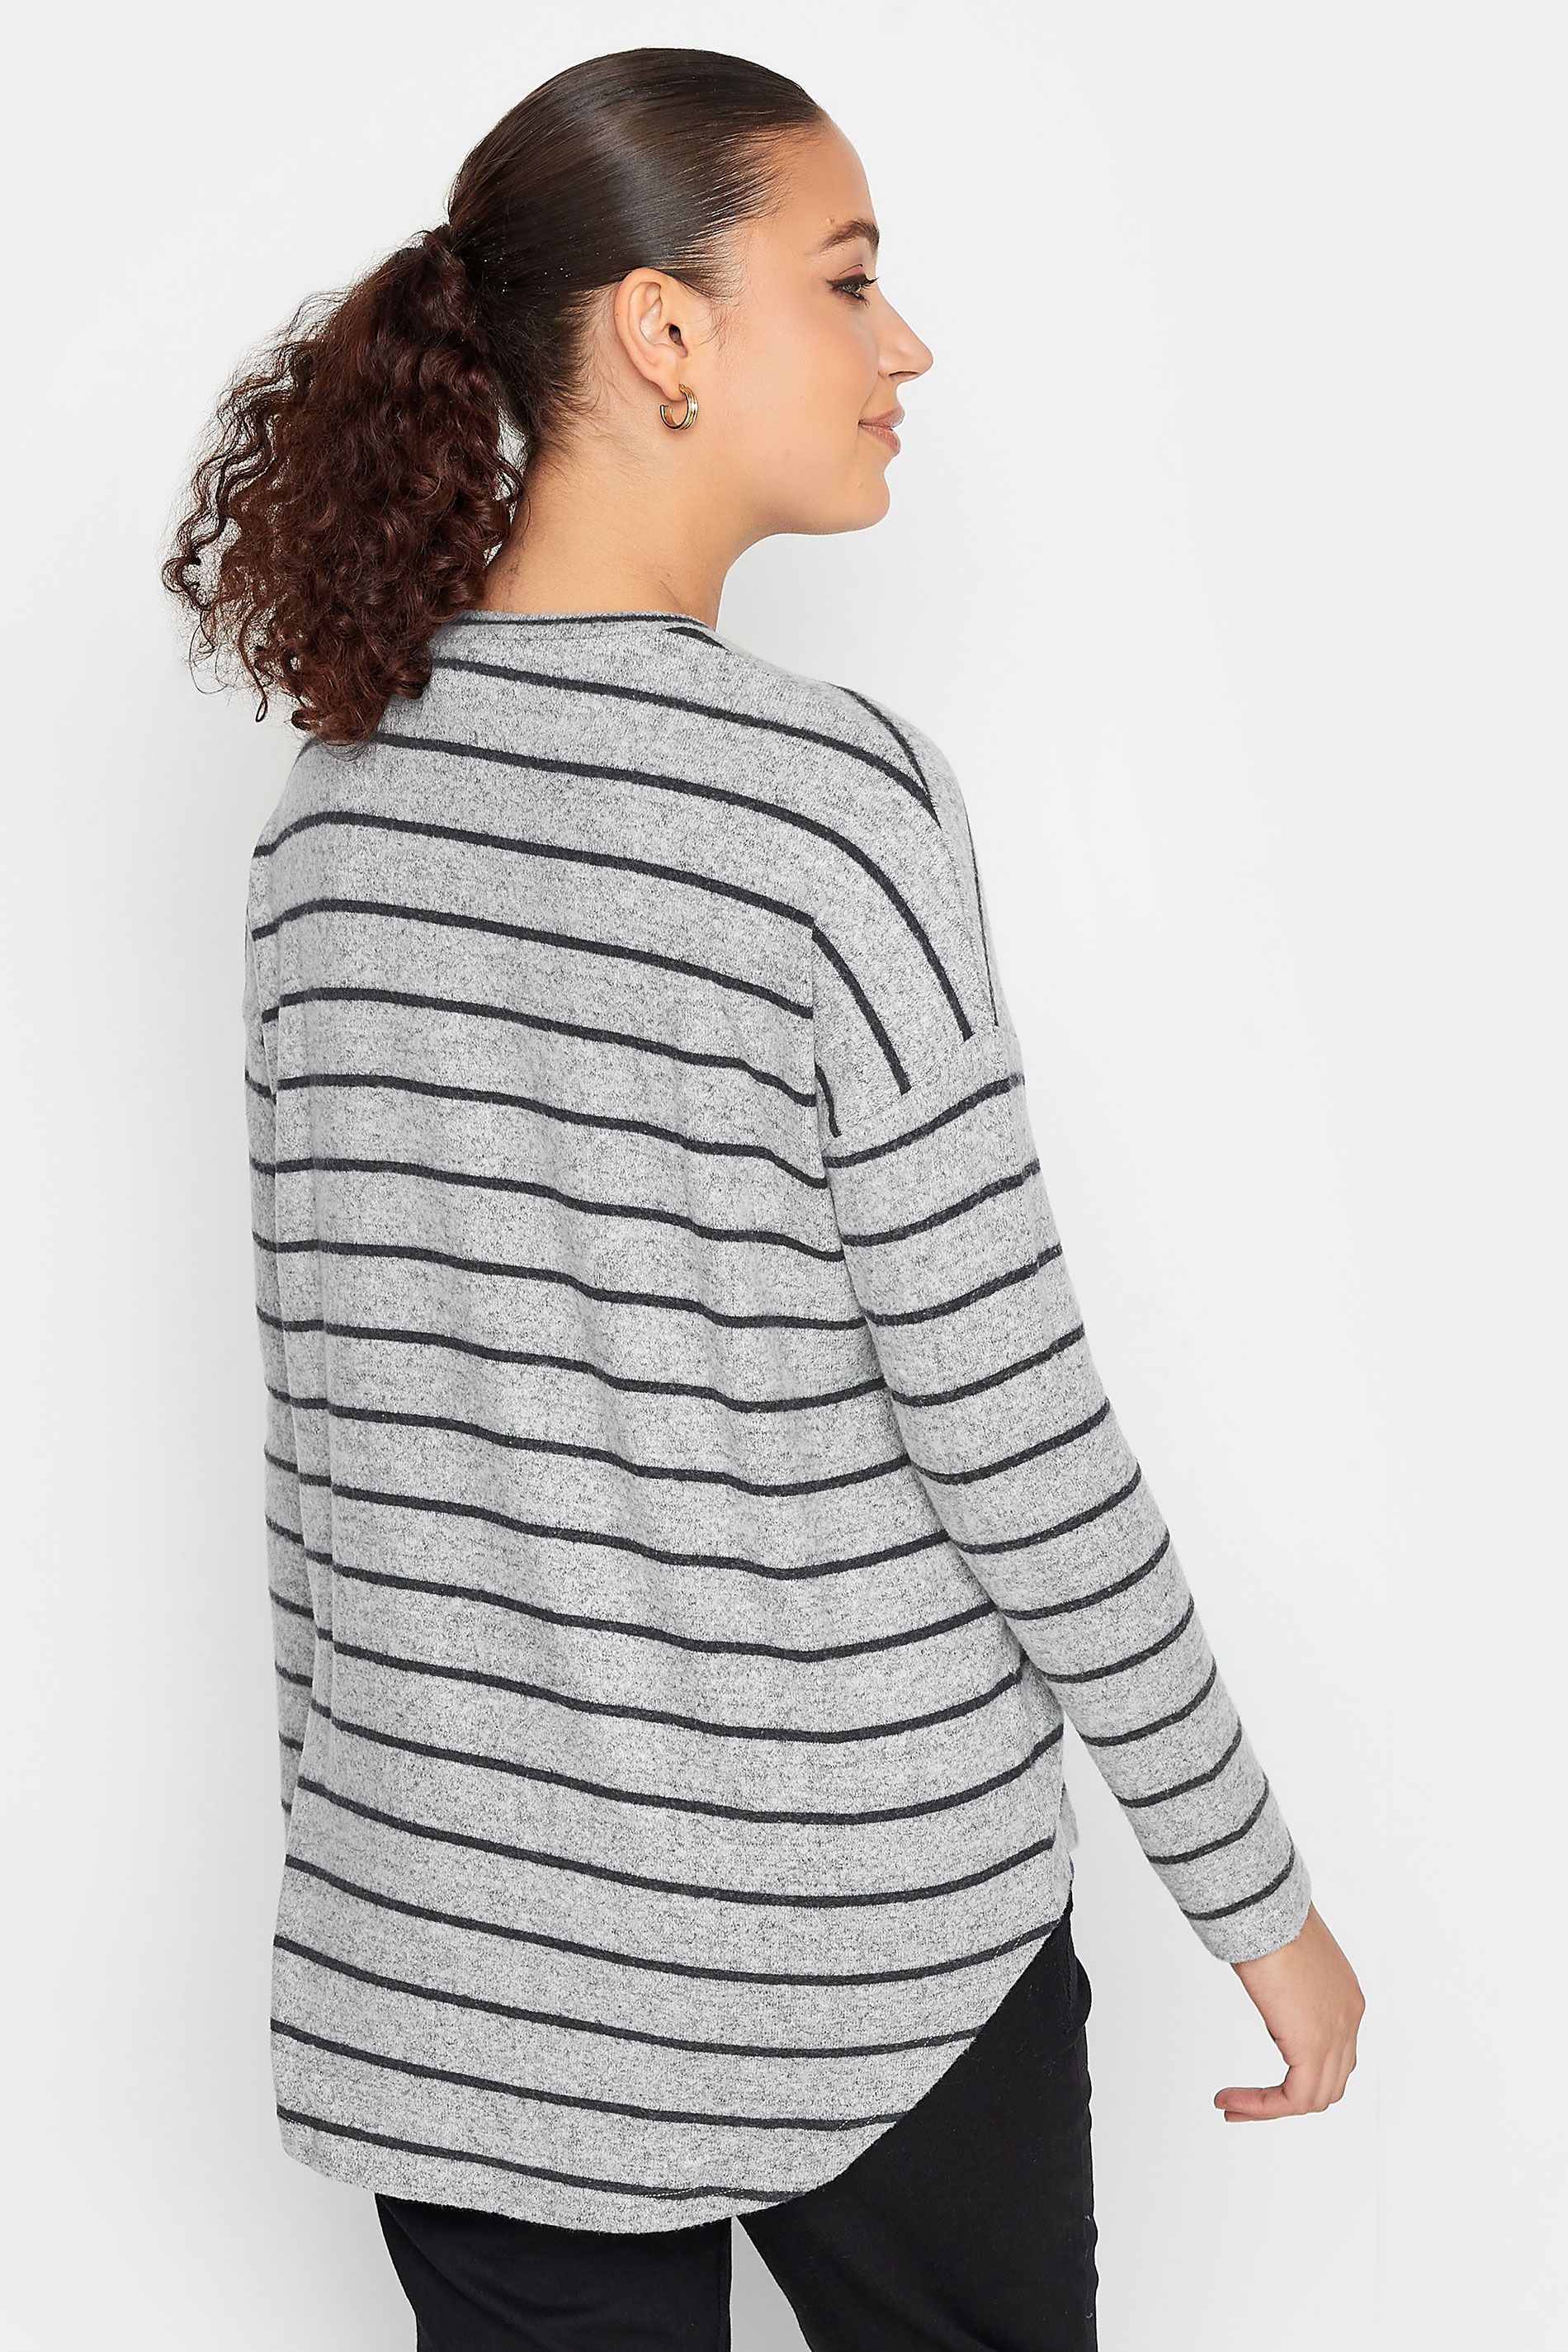 LTS Tall Women's Grey Stripe Soft Touch Top | Long Tall Sally 3